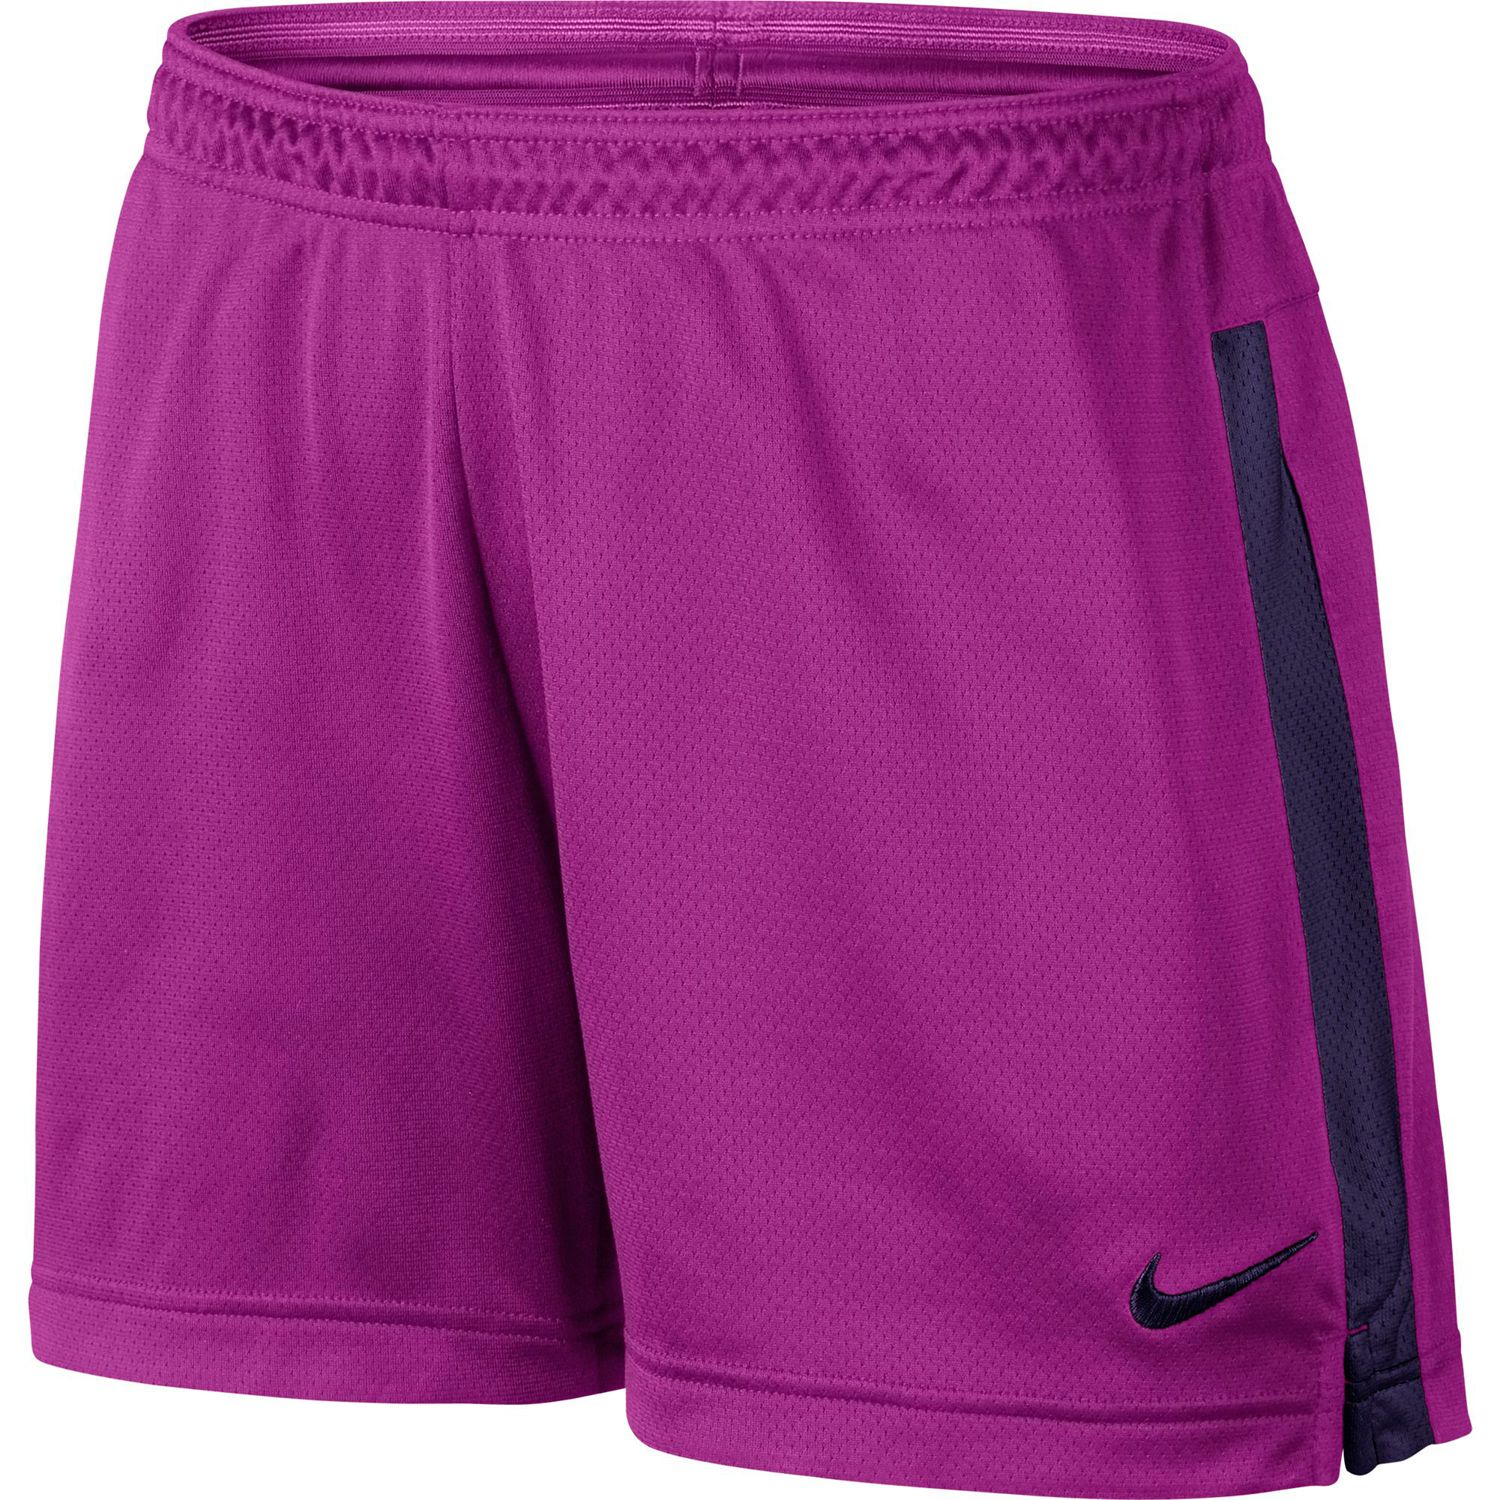 nike soccer academy shorts